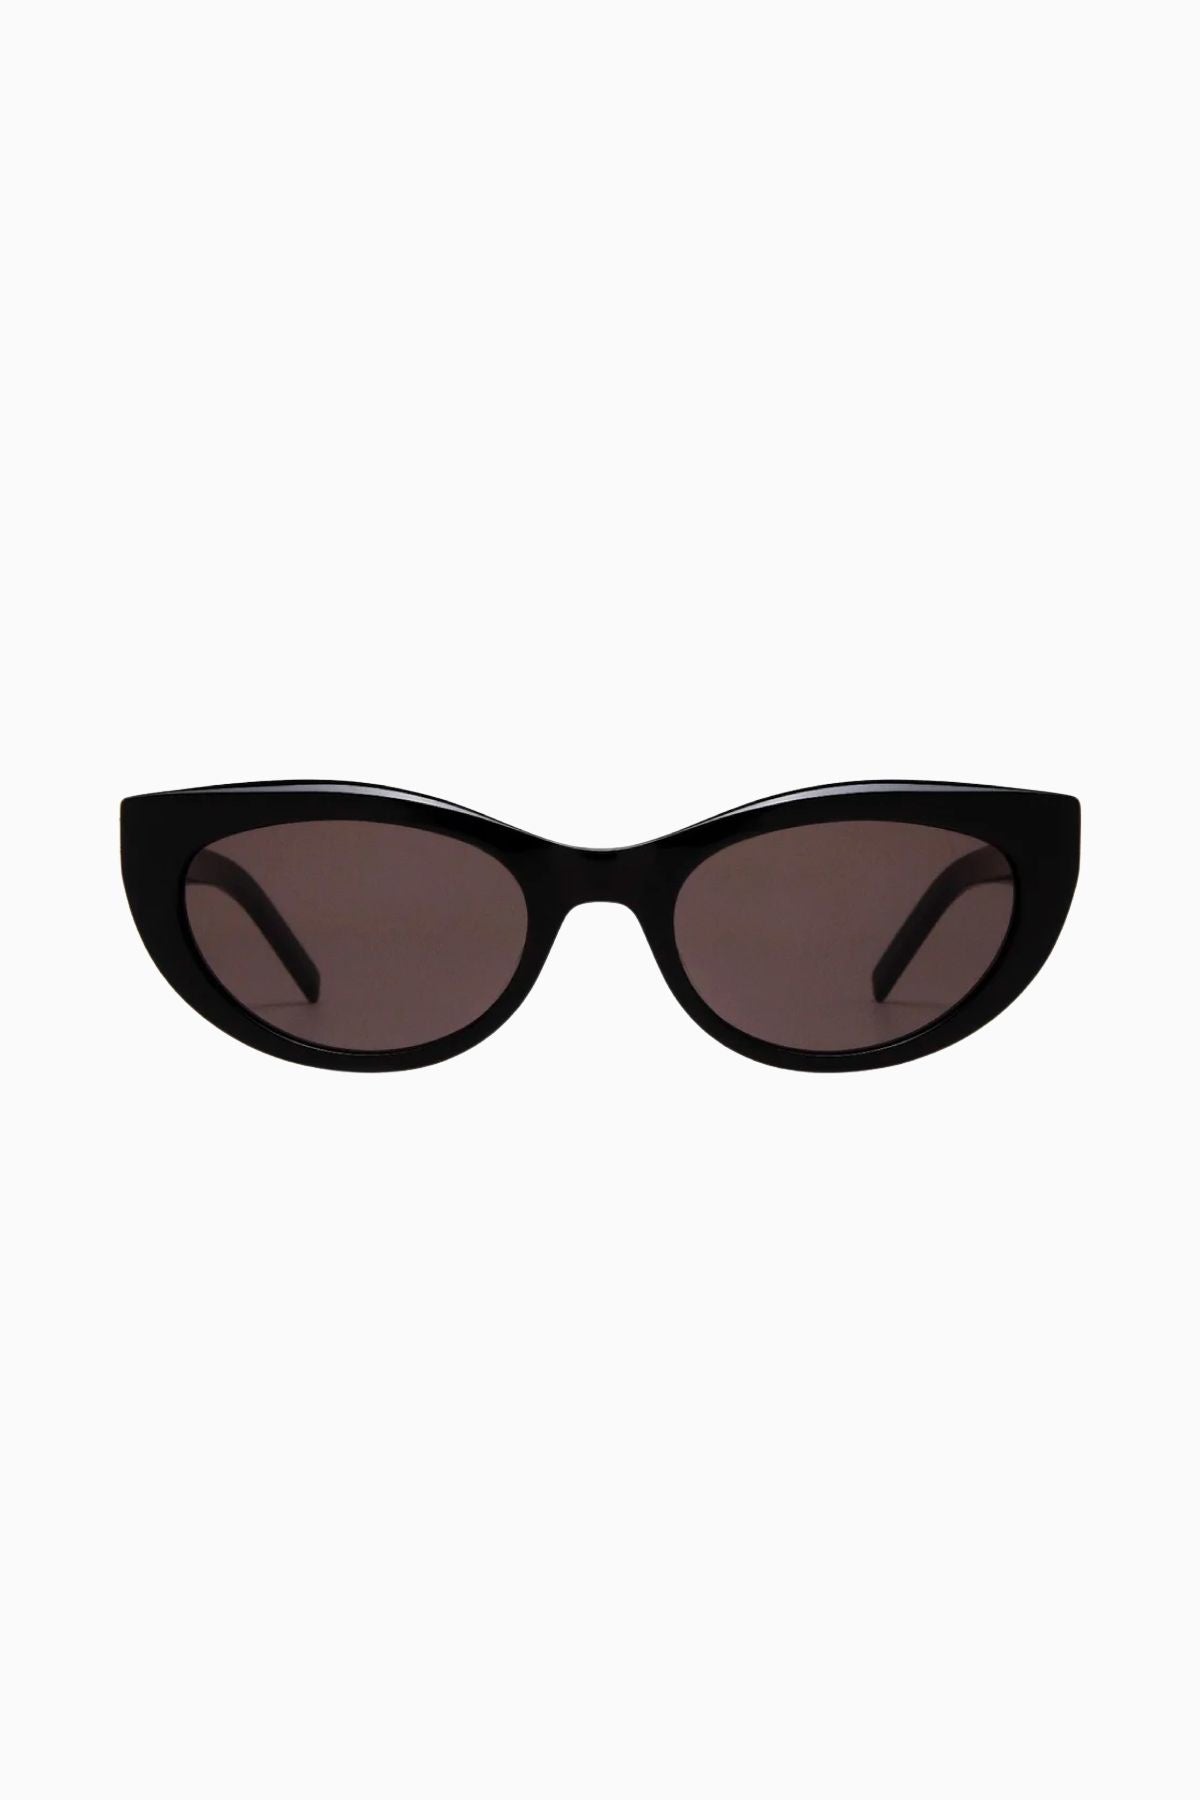 Saint Laurent YSL Narrow Sunglasses - Black